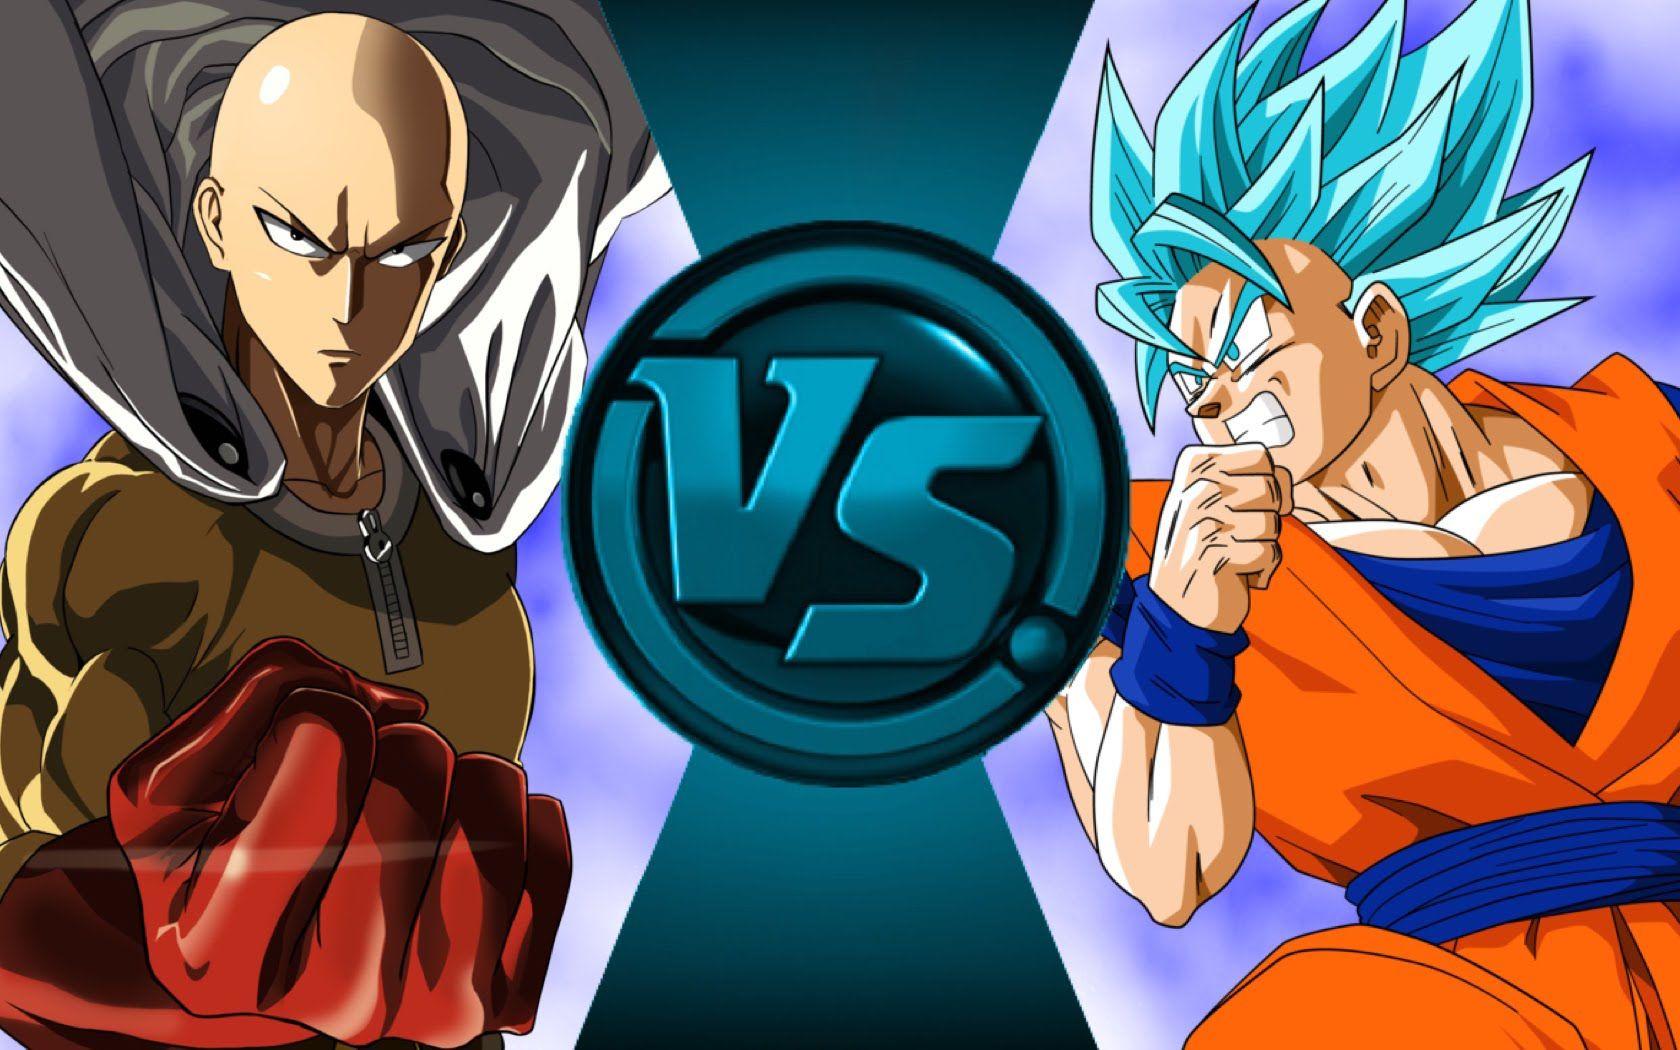 Goku vs Saitama (One Punch Man) Animation by: IOAnimation